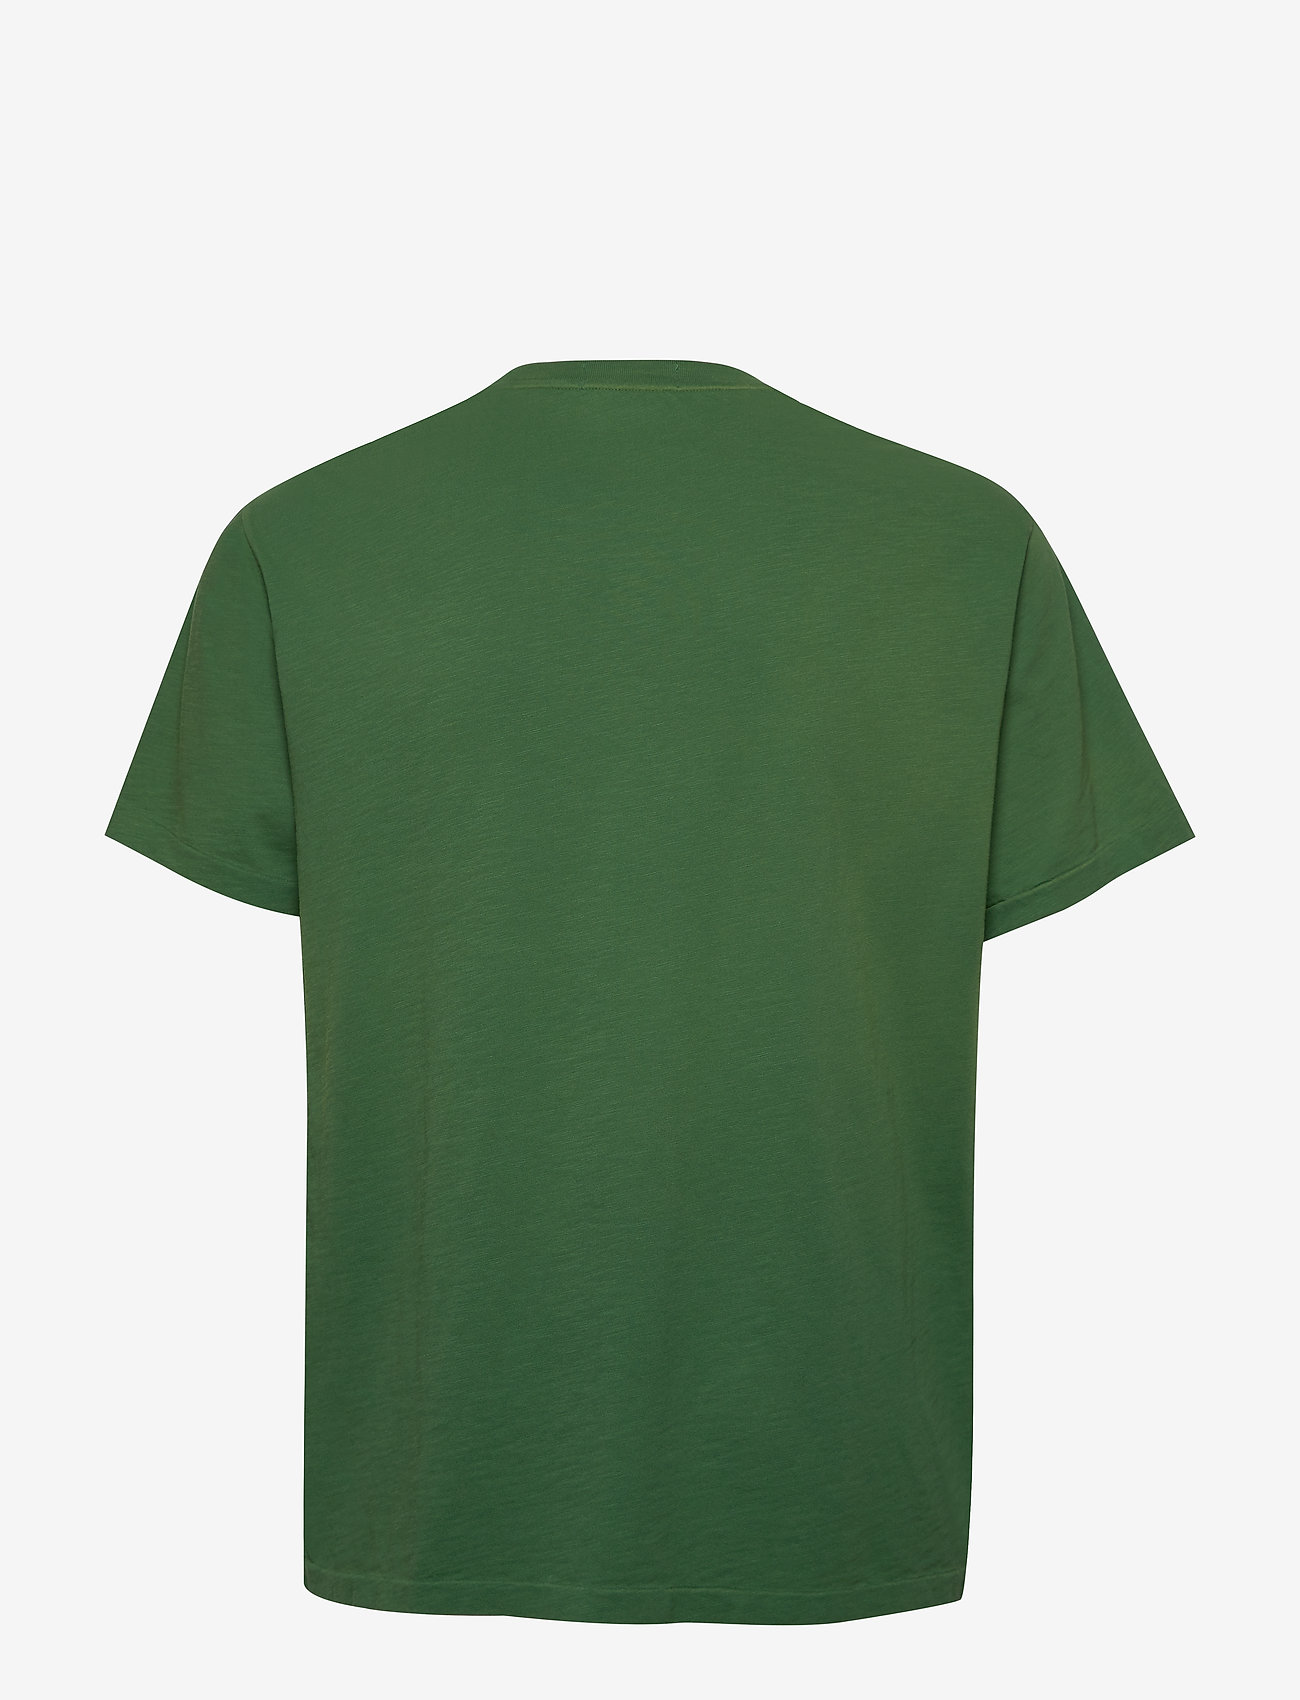 Classic Fit Graphic T-shirt (Verano Green) (51.97 €) - Polo Ralph ...